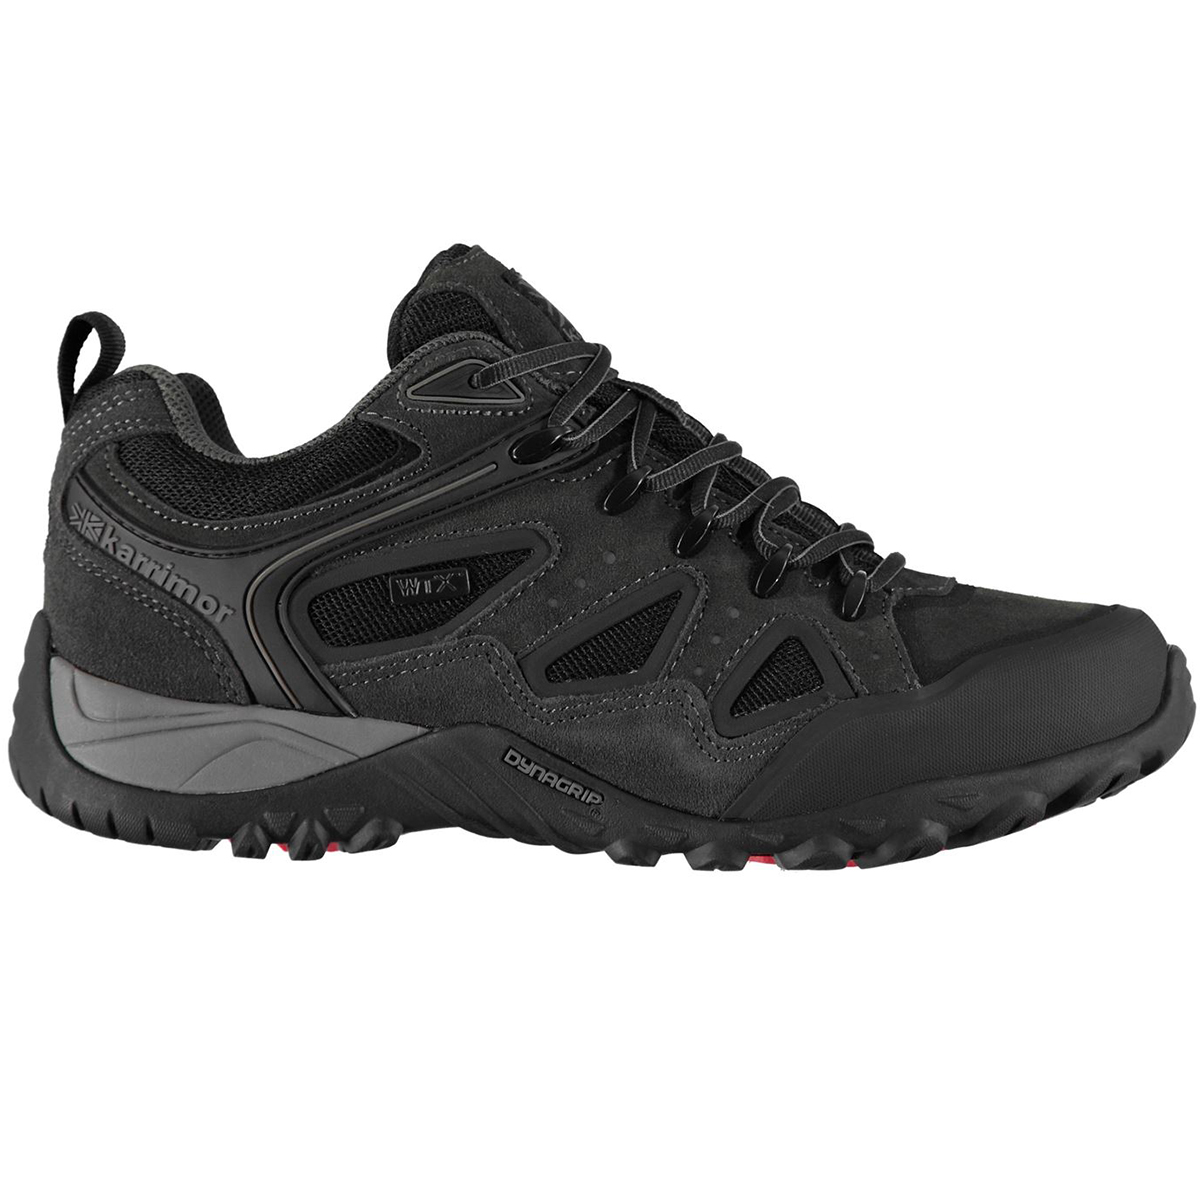 Karrimor Men's Ridge Wtx Waterproof Low Hiking Shoes - Black, 11